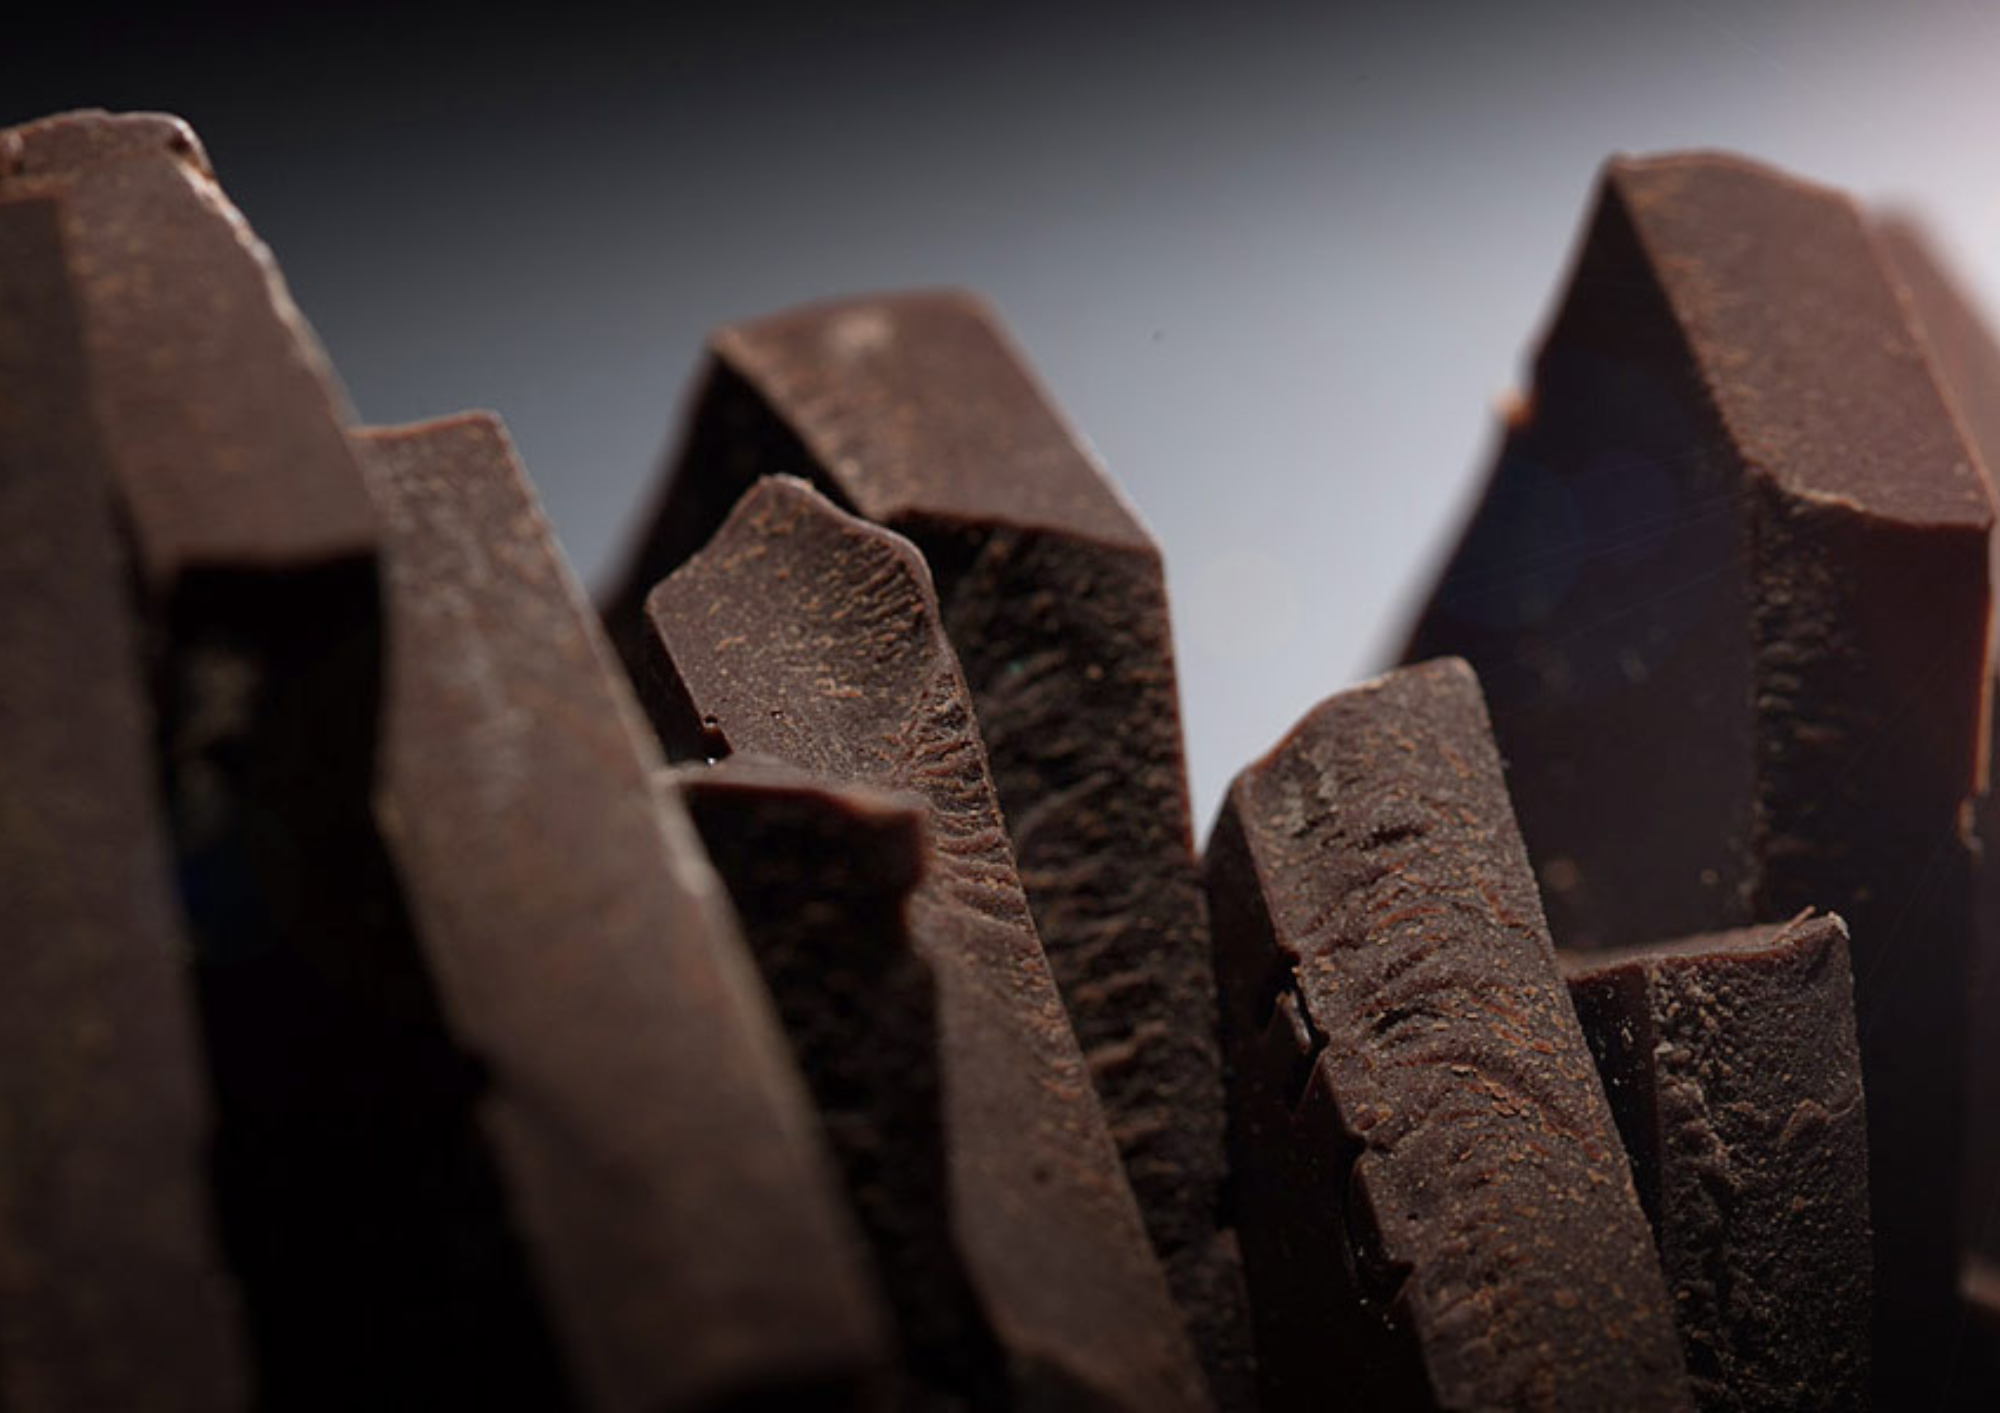 Mars acquires British confectionery brand Hotel Chocolat for £534m